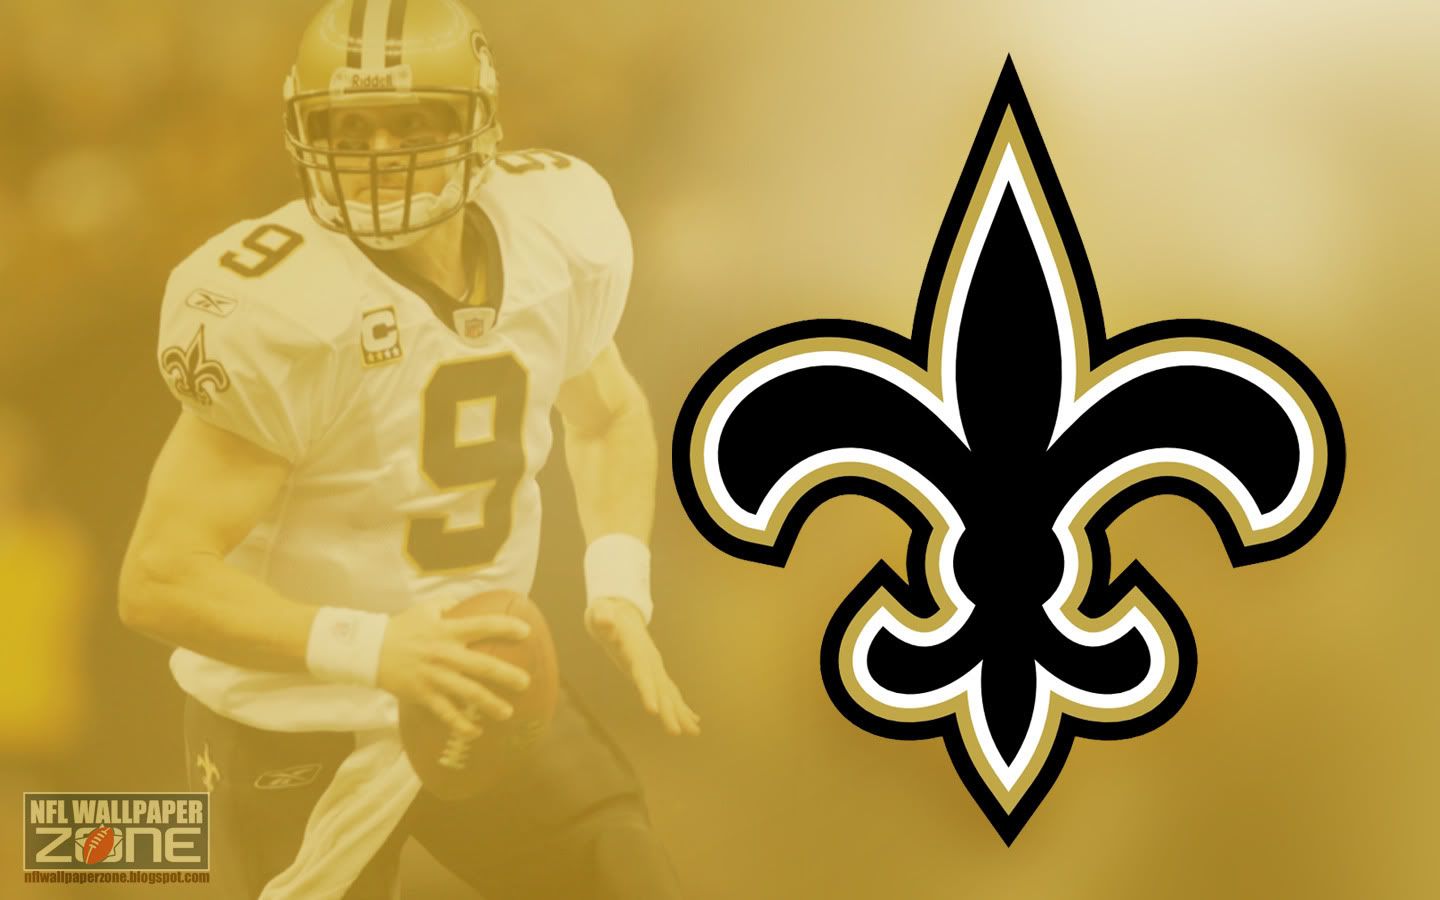 NFL Wallpaper Zone: New Orleans Saints Wallpaper - Free Saints ...